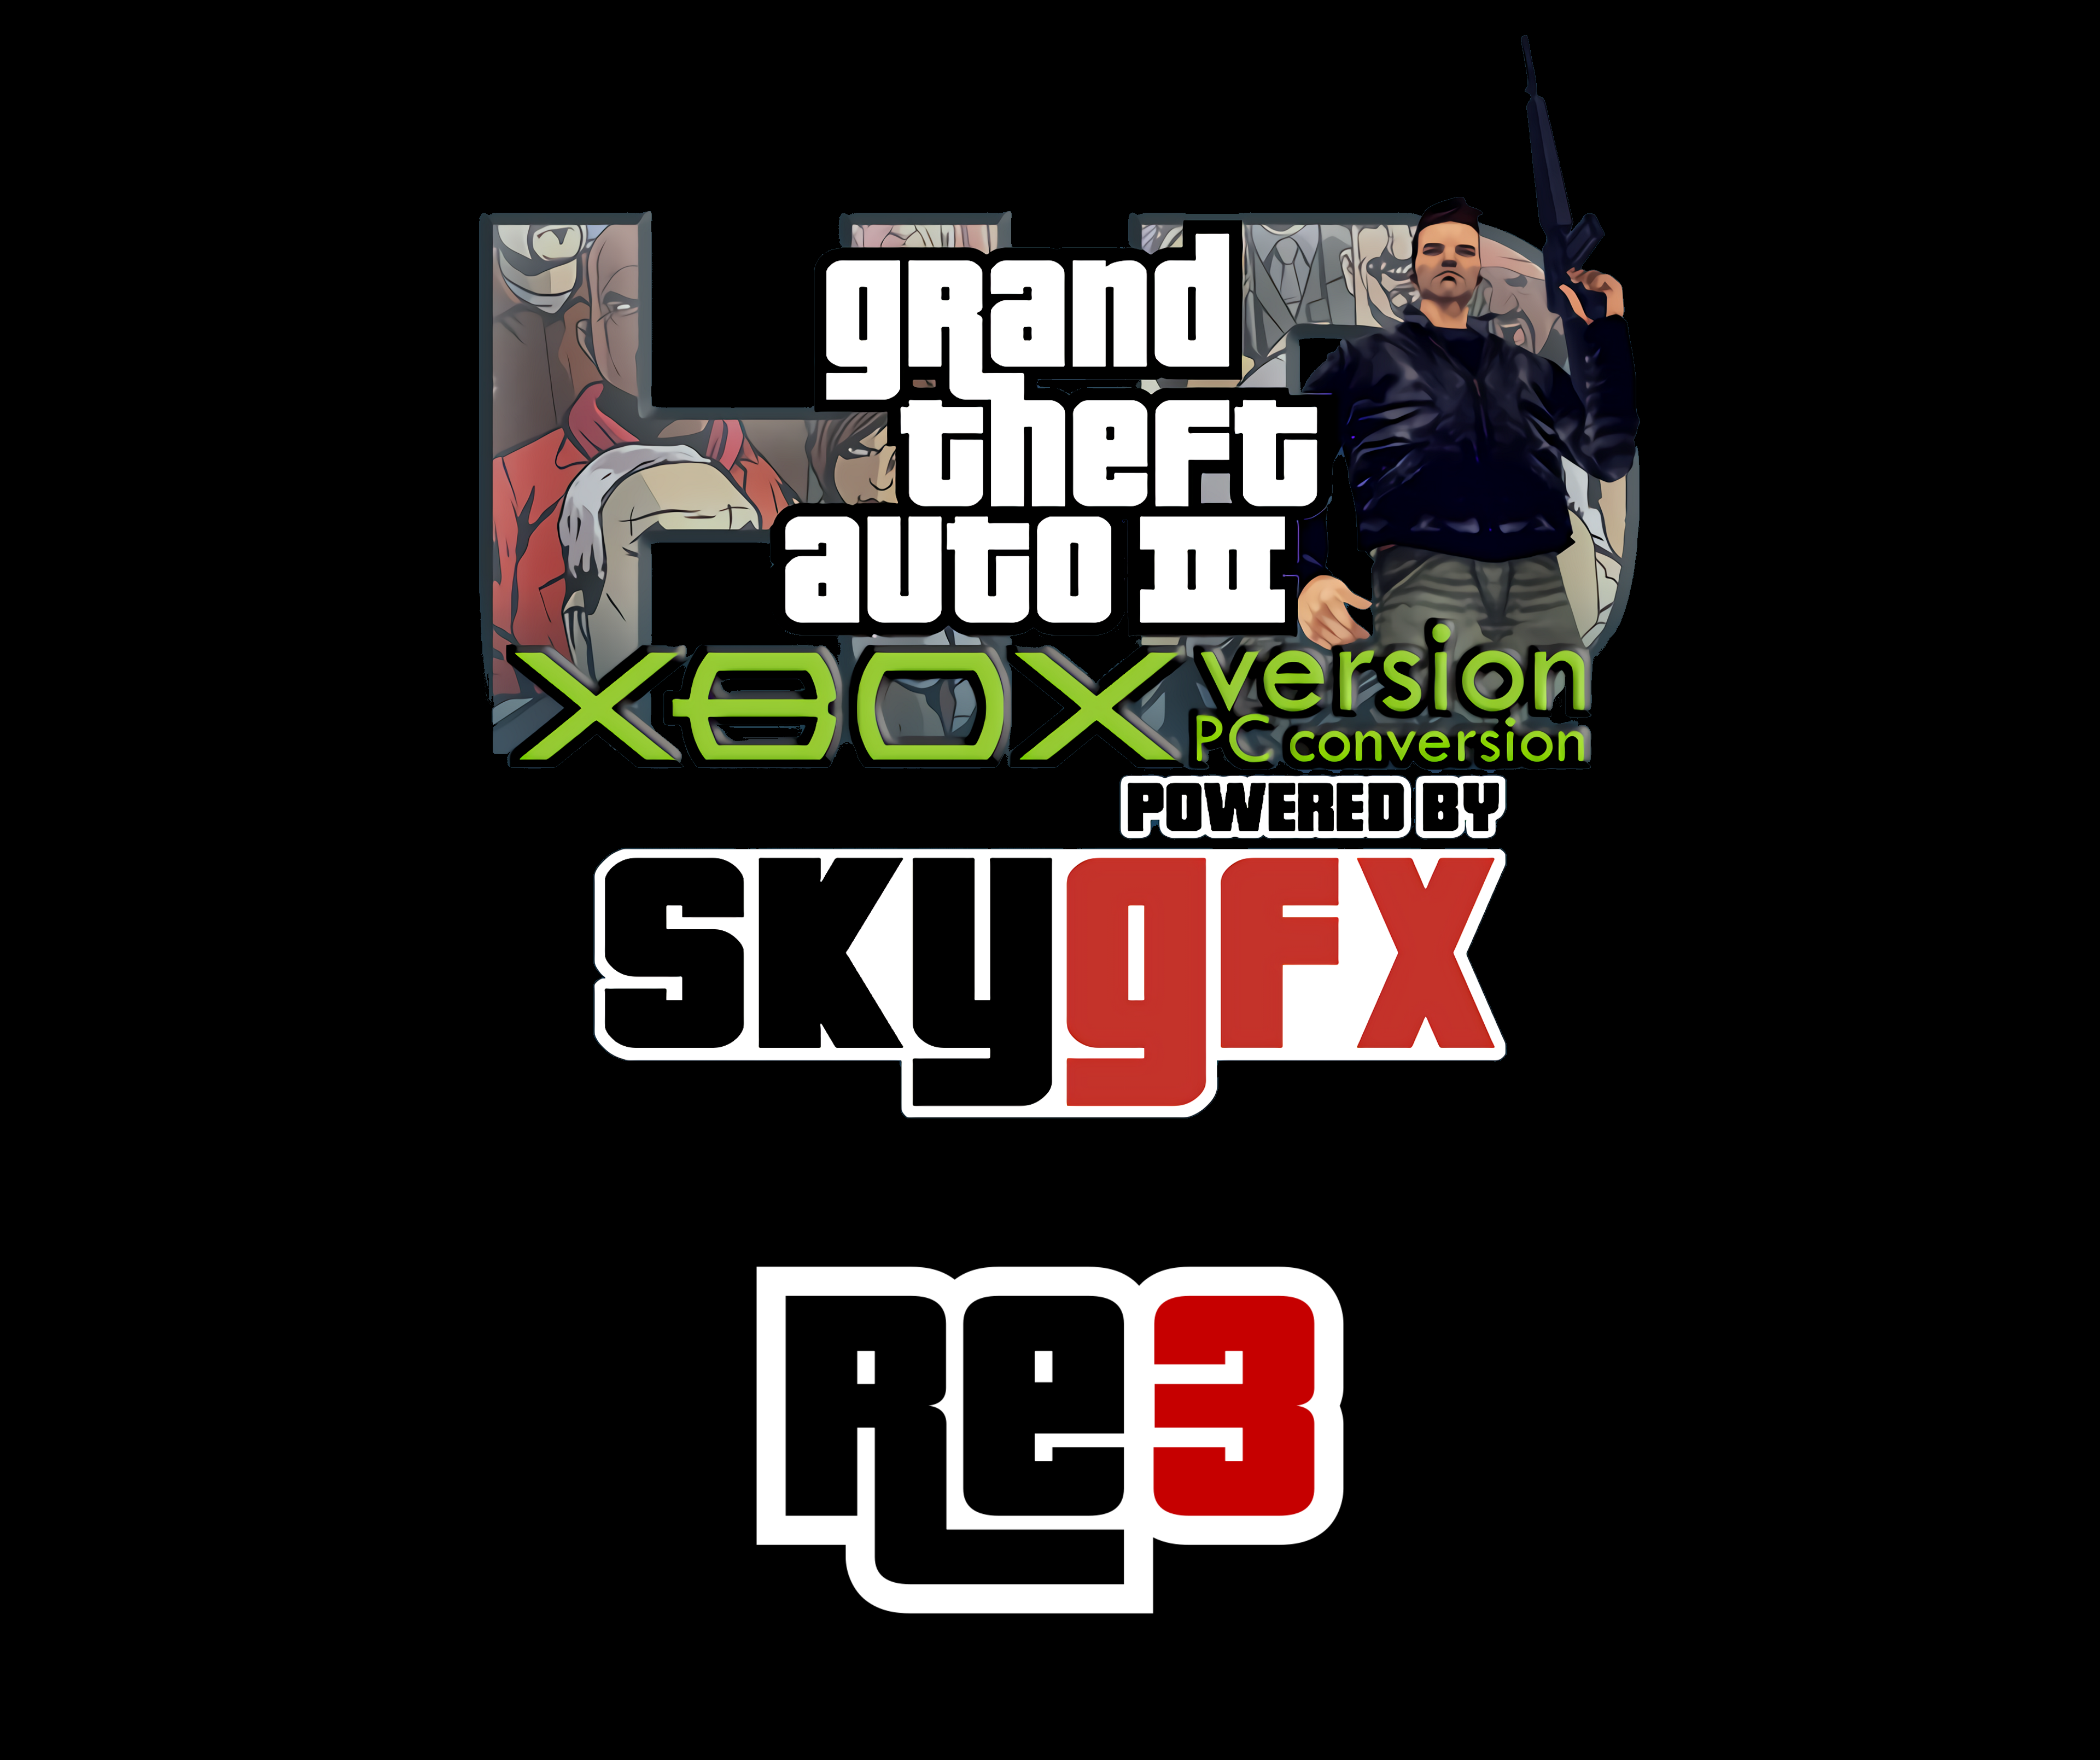 GTA III - Saved Game complete (Mod) for Grand Theft Auto III 